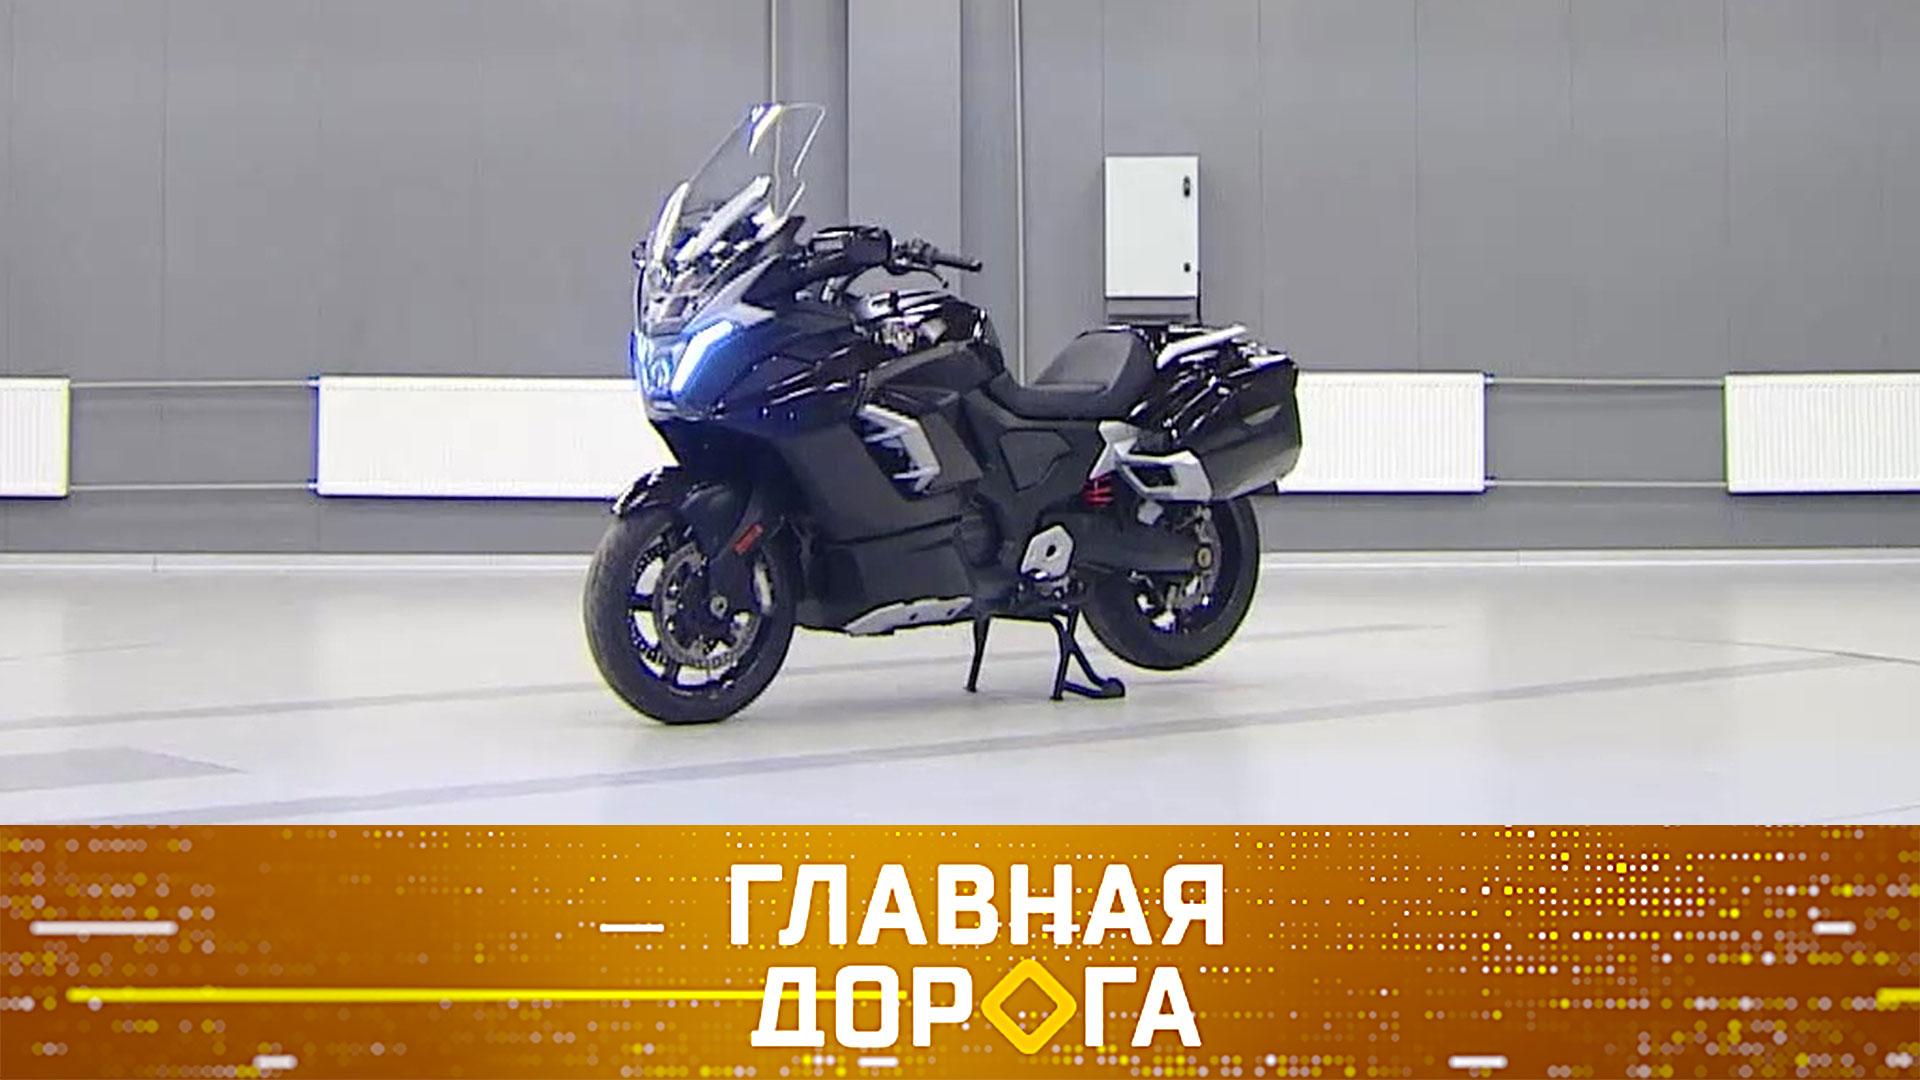 Aurus Merlon  электромотоцикл спецназначения, автоманьяк за рулем и тест BMW i3 | Главная дорога